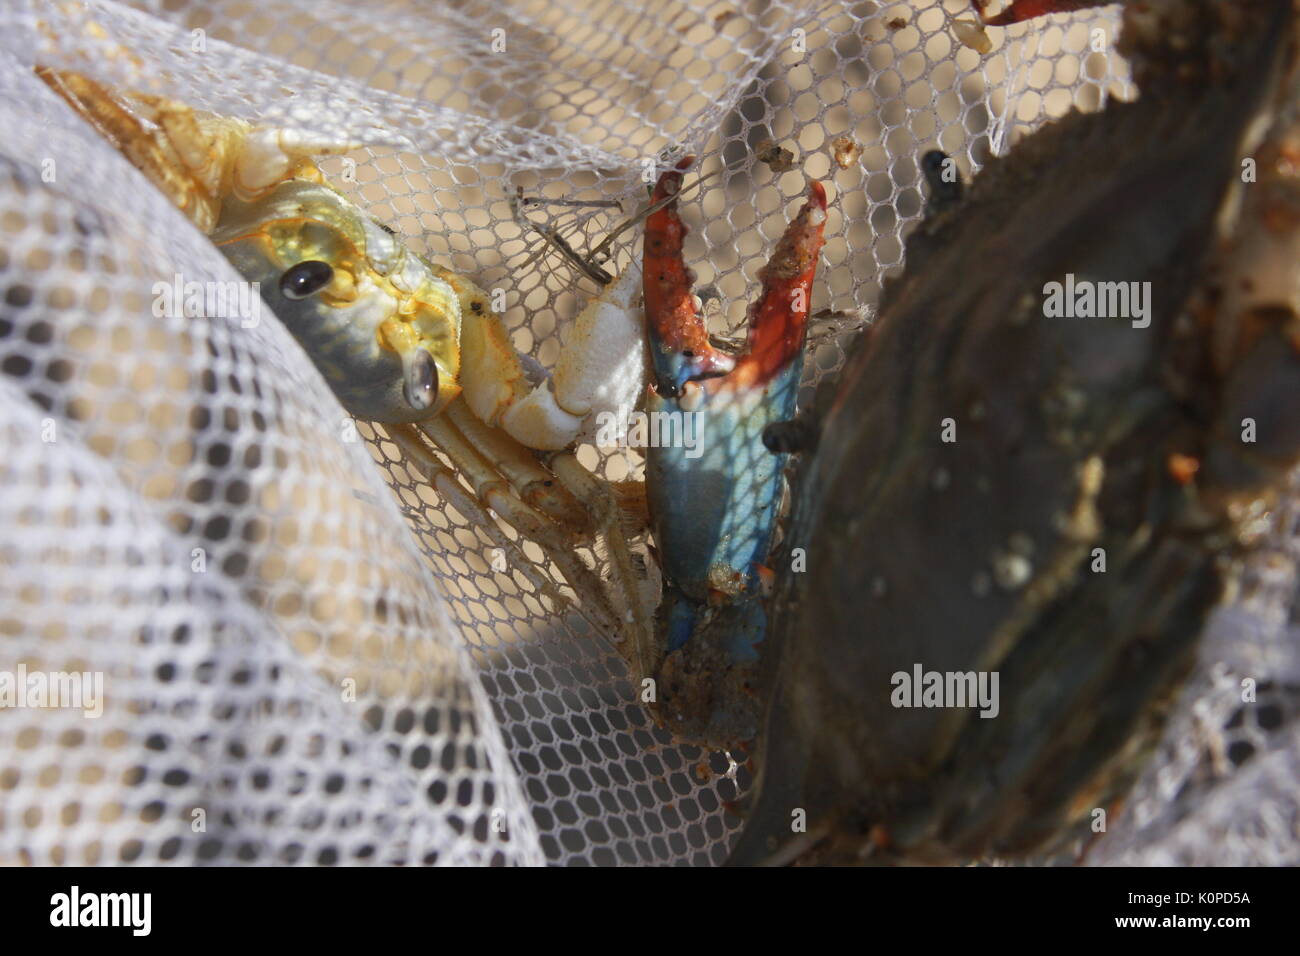 Chesapeake blue crab caught in net Stock Photo